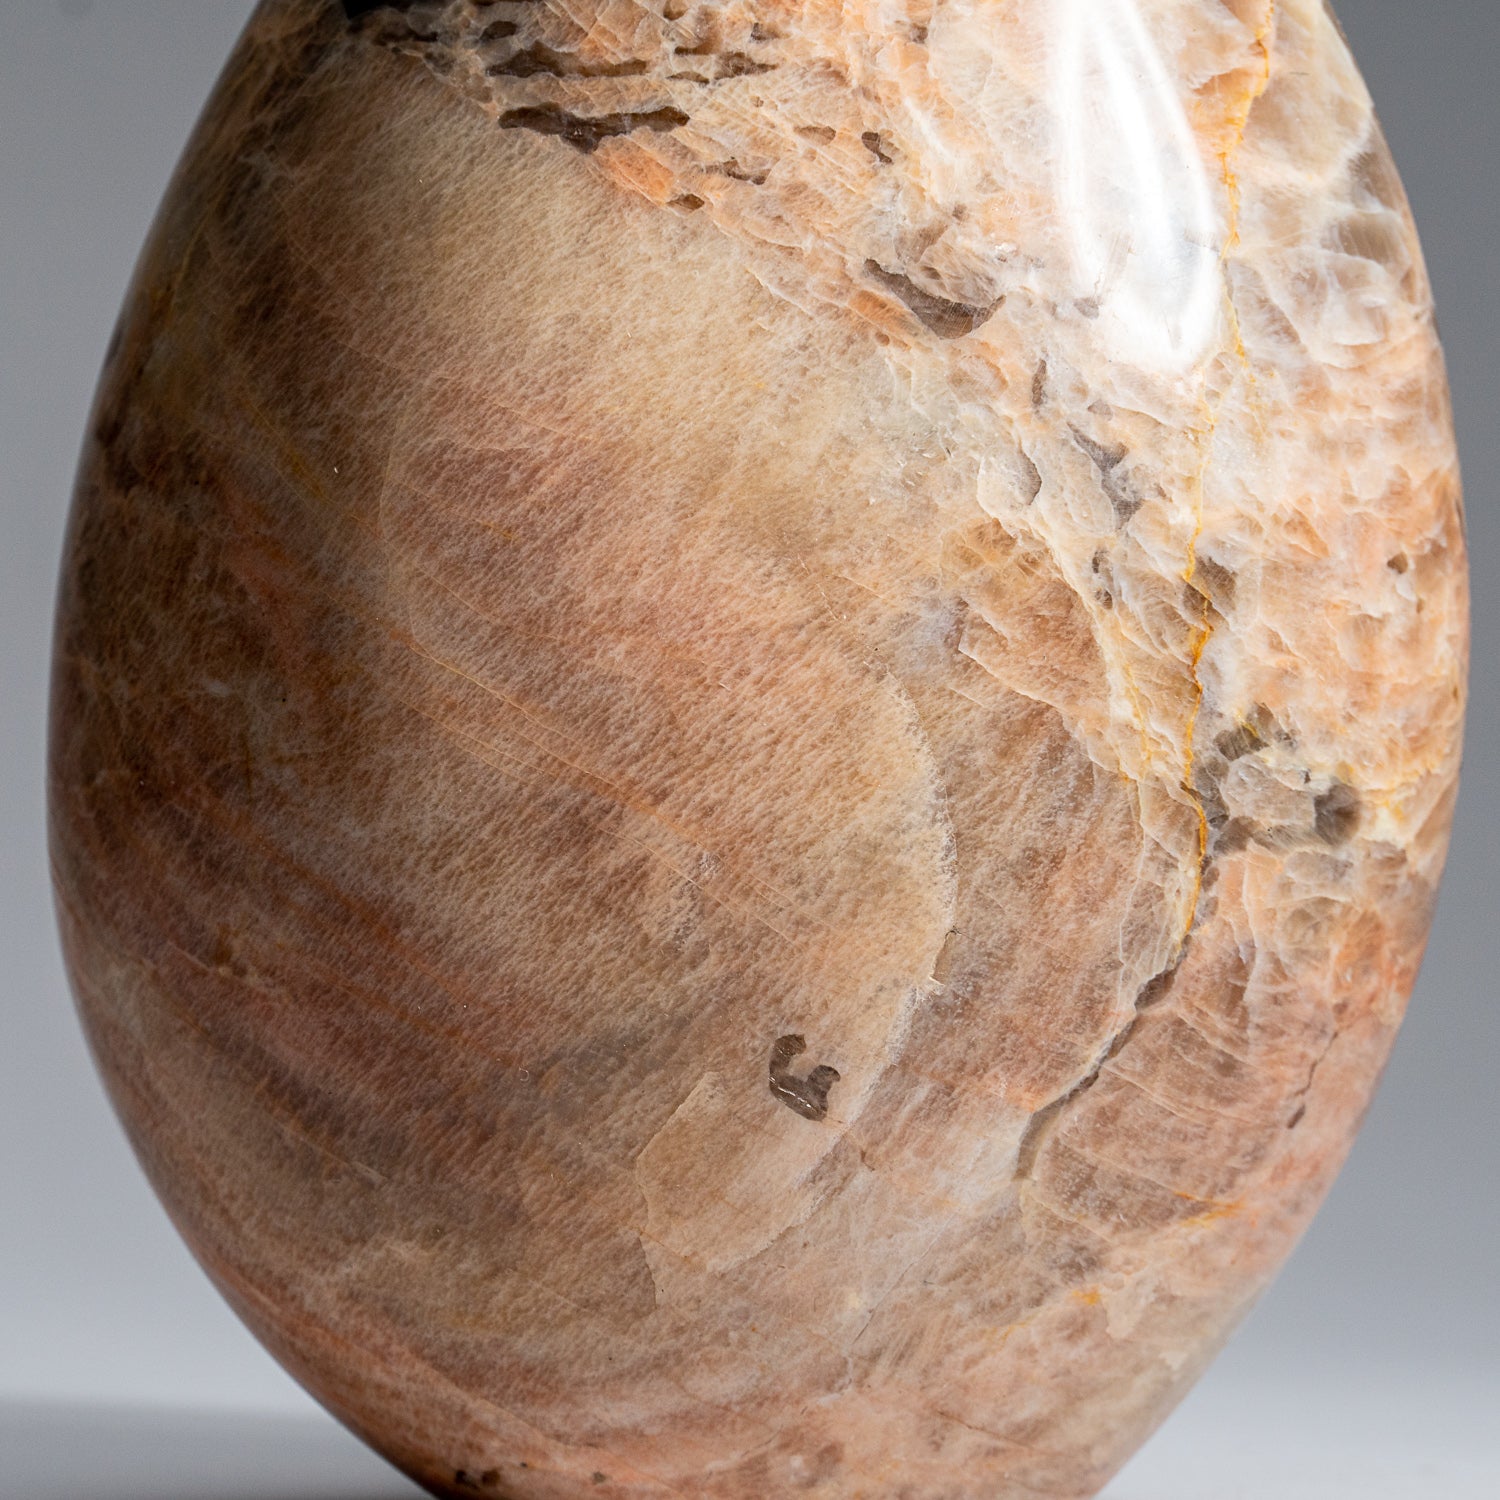 Genuine Polished Peach Moonstone Freeform from Madagascar (3.3 lbs)